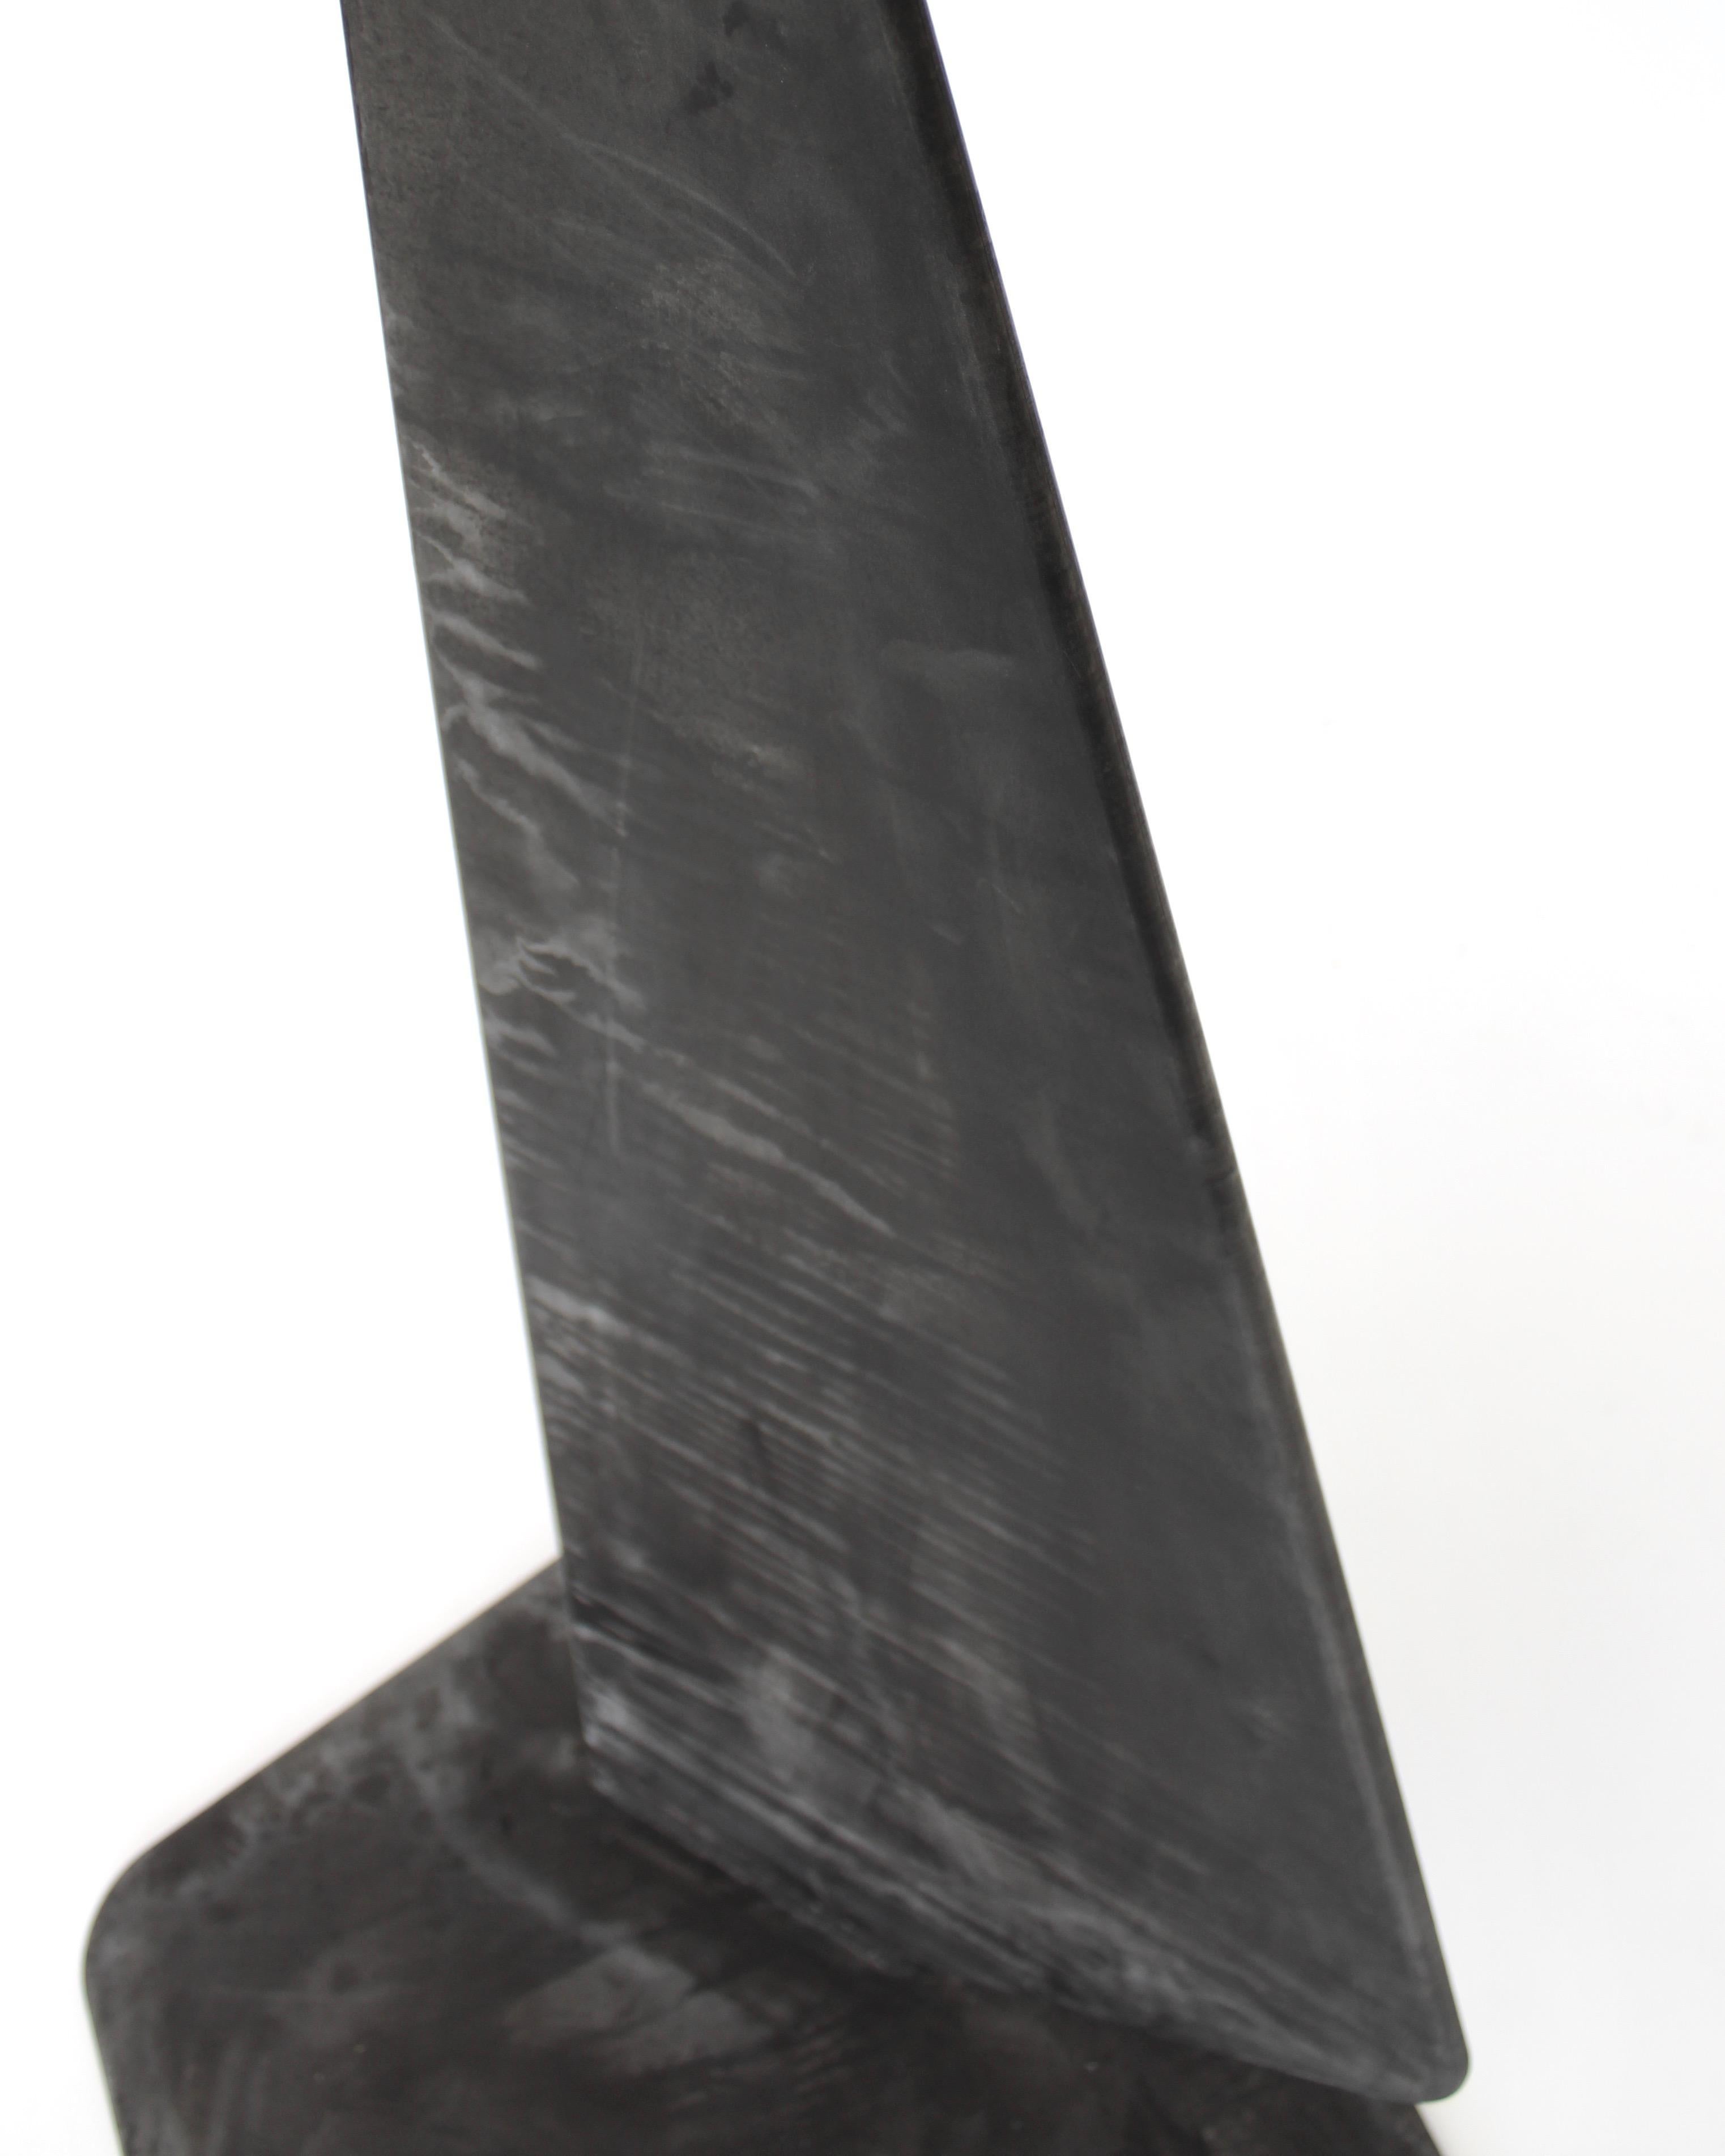 Artist Elliot Bergman Patinated Dark Charcoal Gray to Black Aluminum Sculpture  5